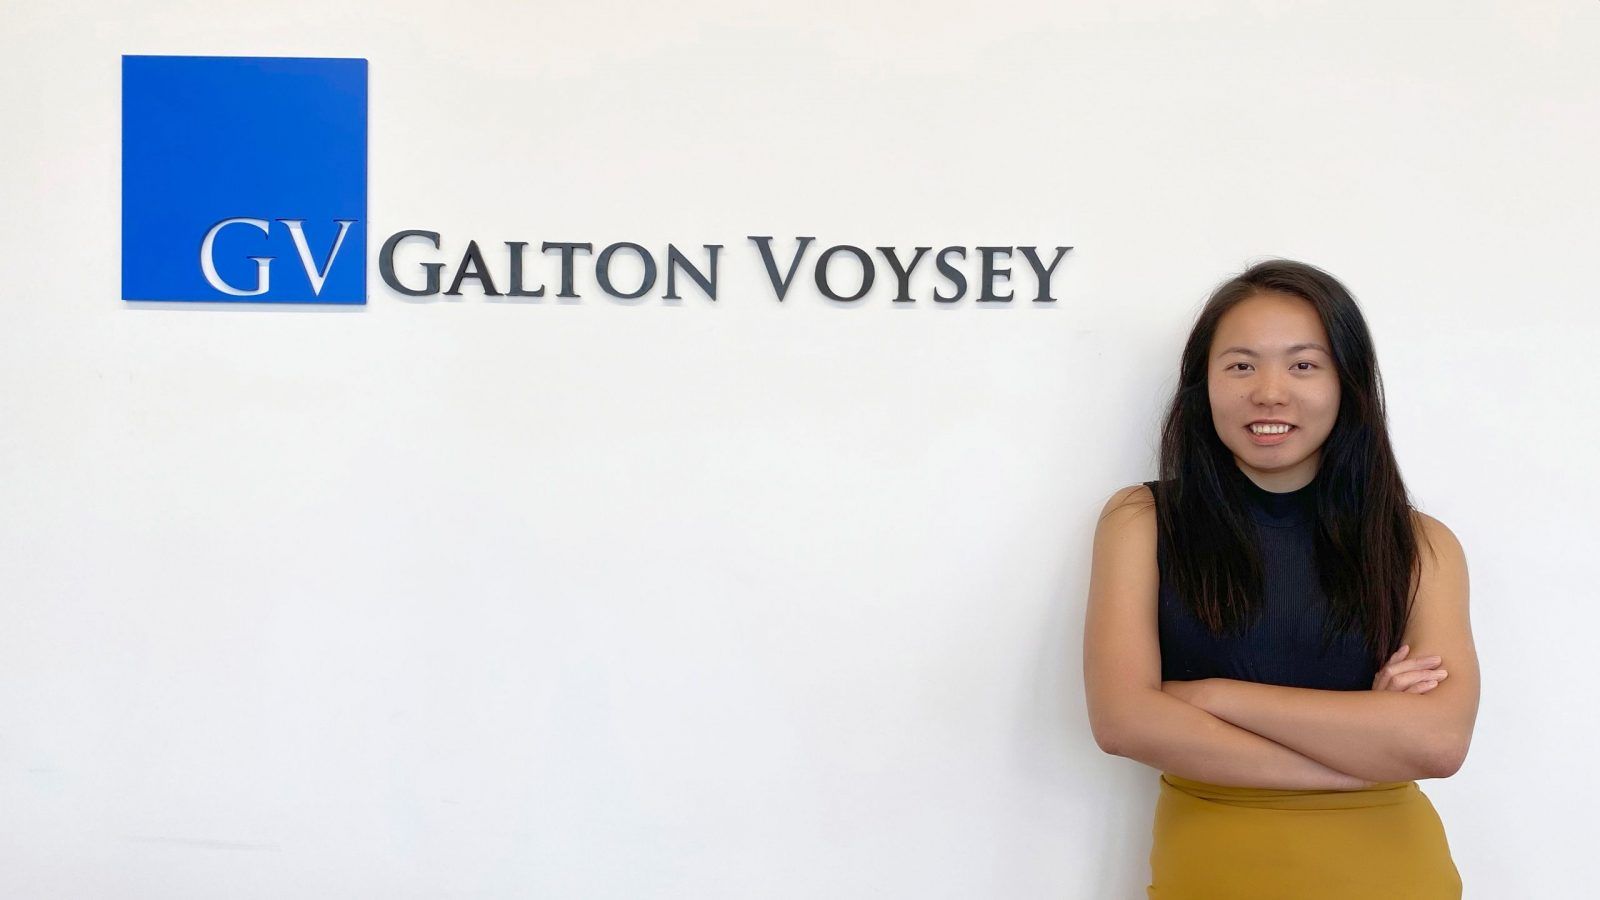 Galton Voysey’s CEO Kimberley Woo on Building Great Brands